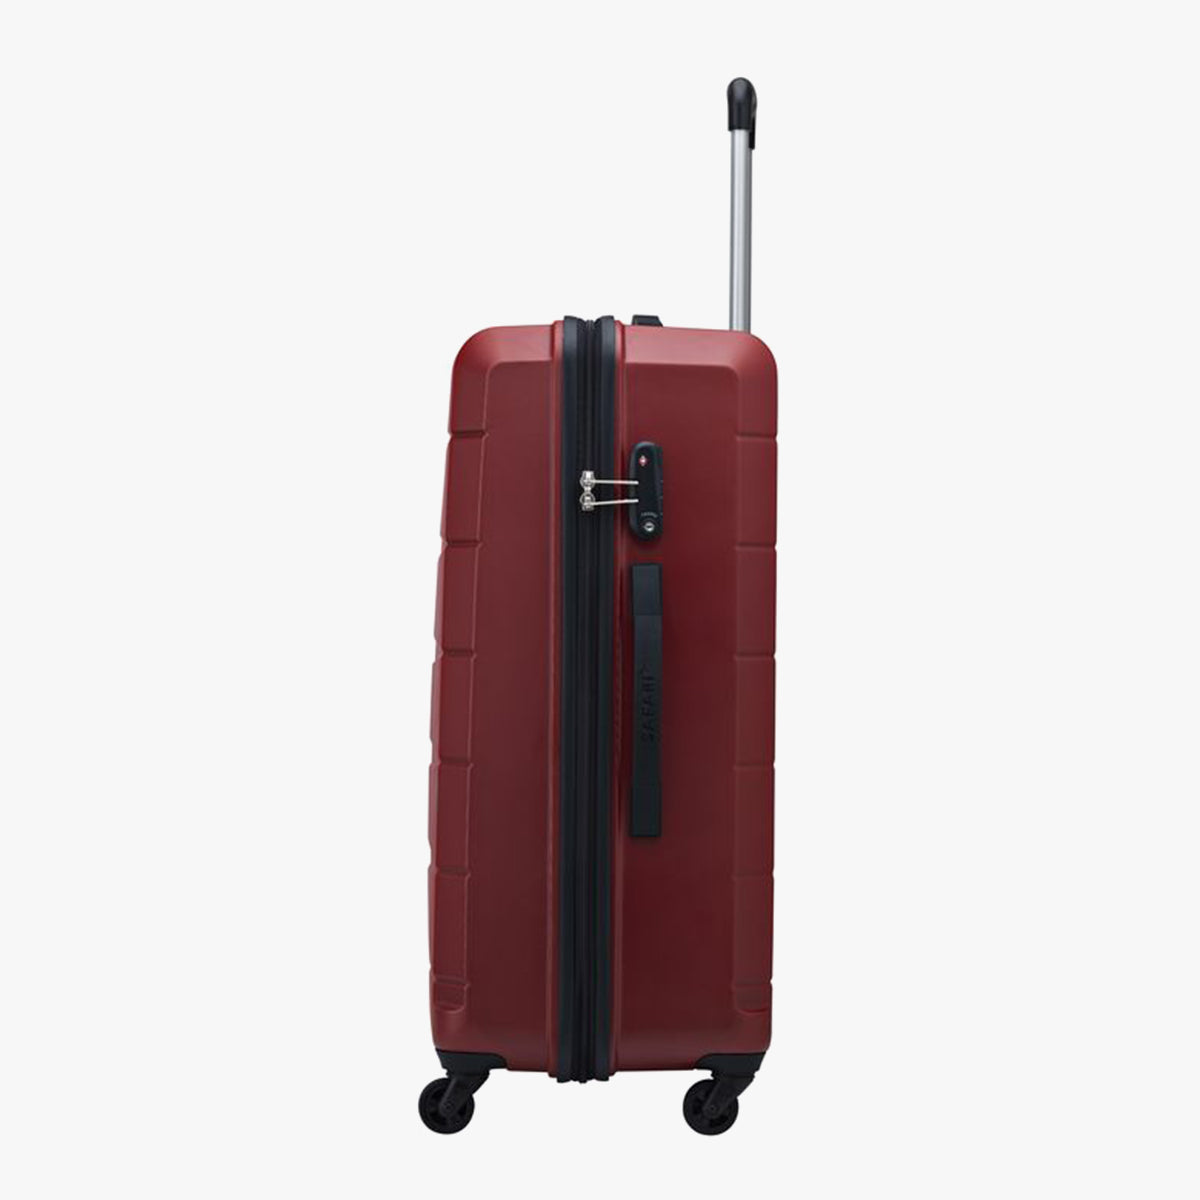 Regloss Antiscratch Hard Luggage Combo Set (Cabin, Medium, Large) - Red